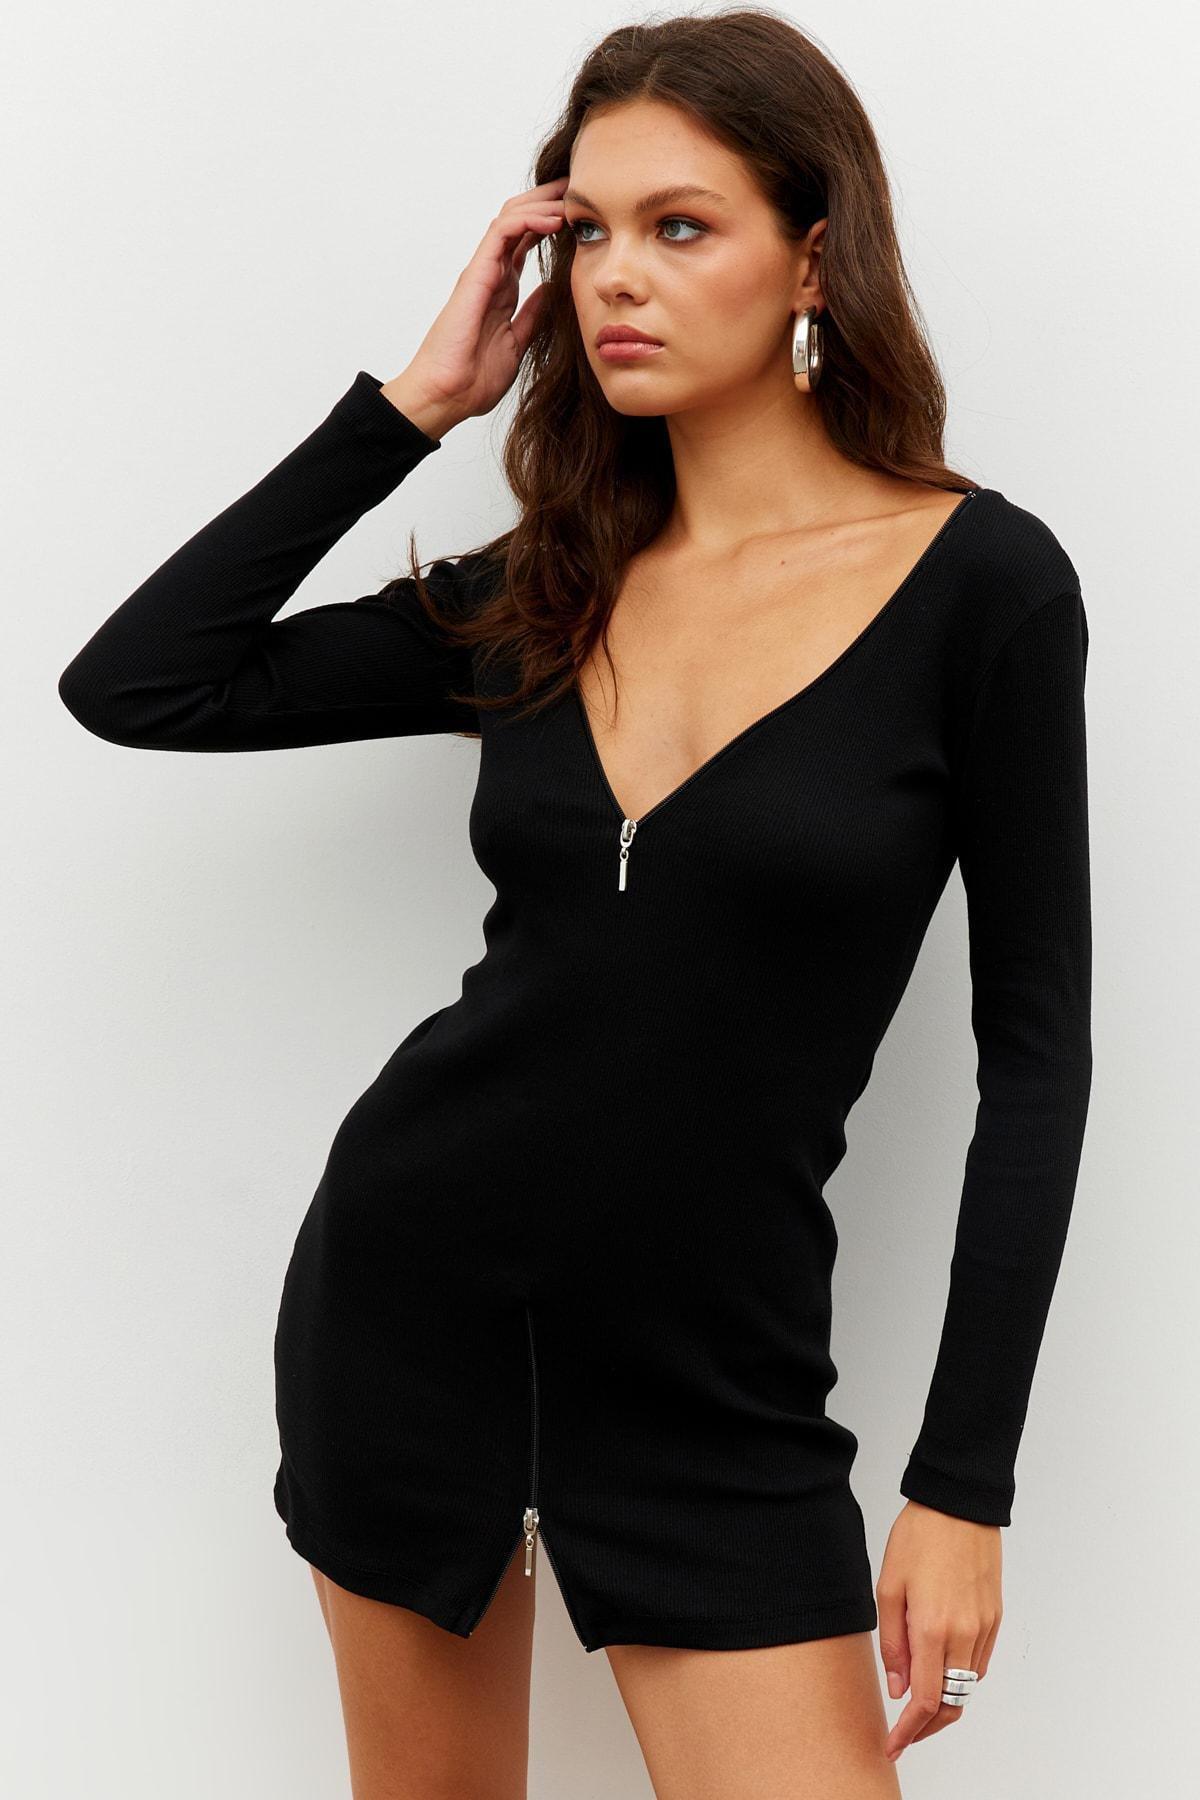 Cool & Sexy - Black Zippered Camisole Mini Dress